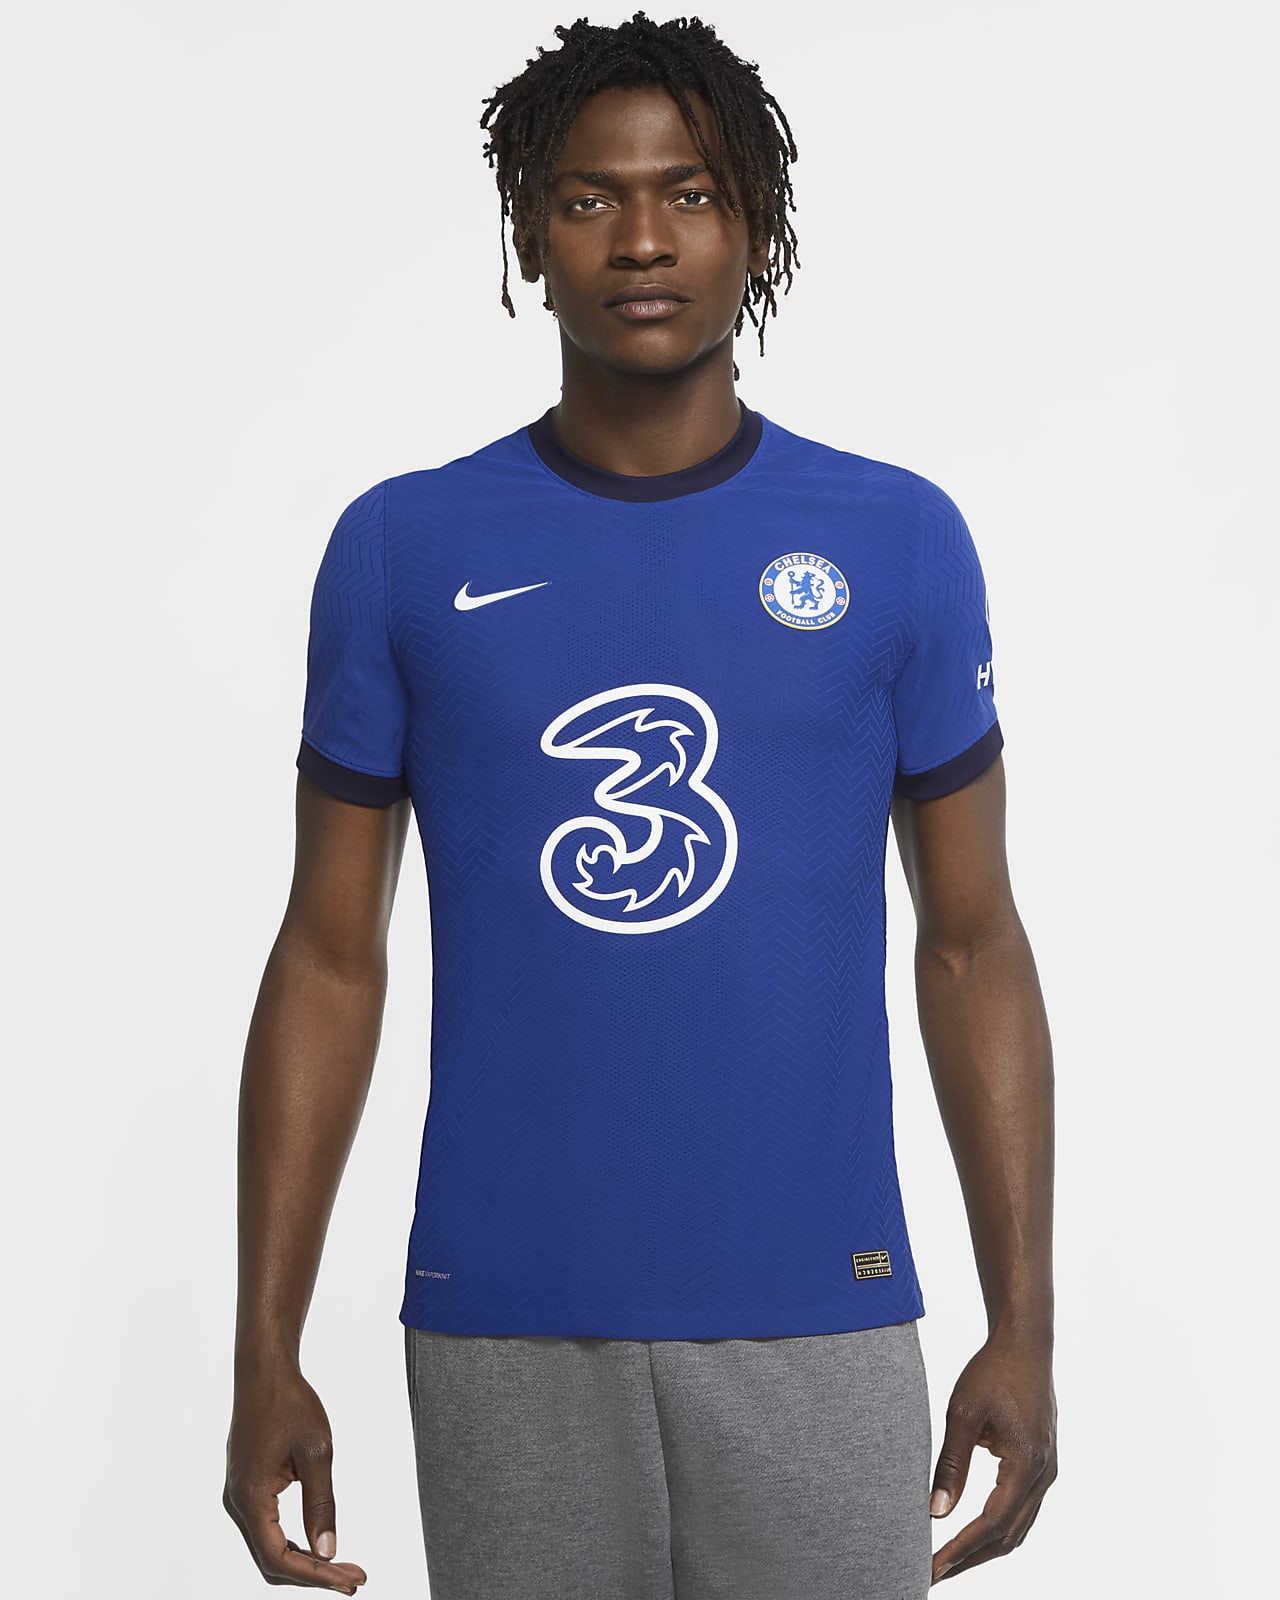 Chelsea F.C. 2020/21 Vapor Match Home Men's Football Shirt. Nike LU